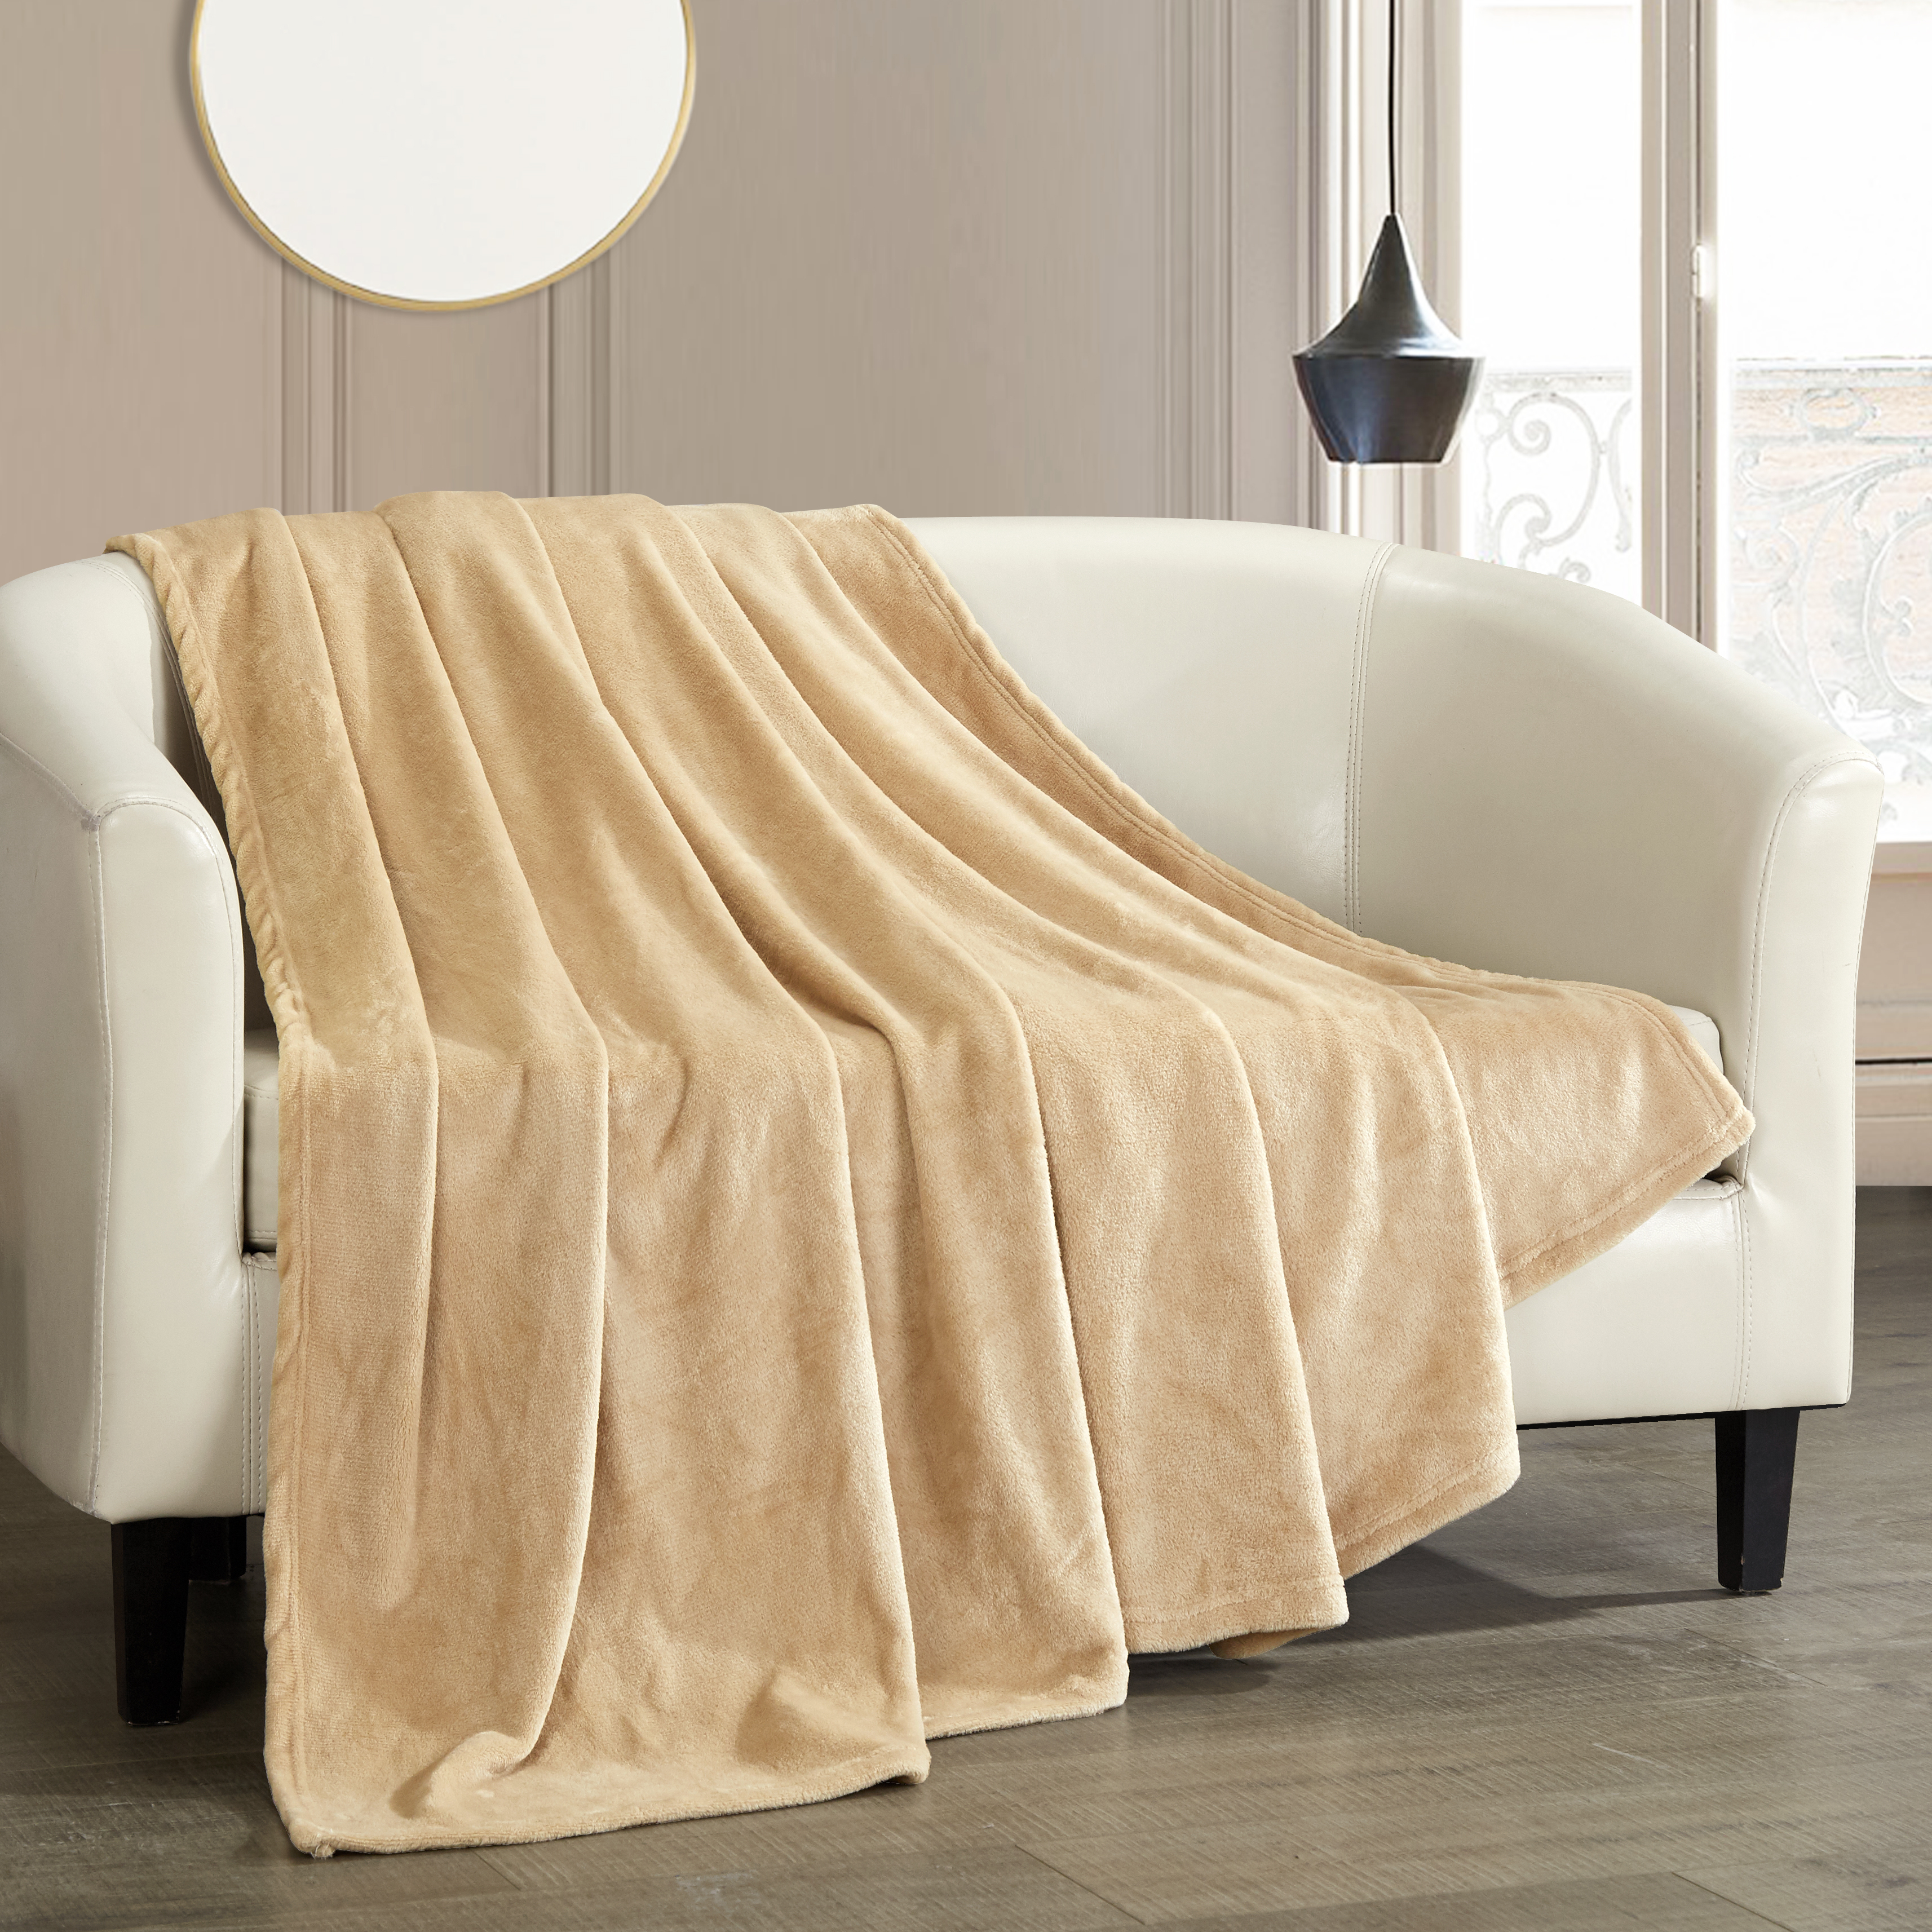 Kaeden Throw Blanket Cozy Super Soft Ultra Plush Micro Mink Fleece Decorative Design - Beige